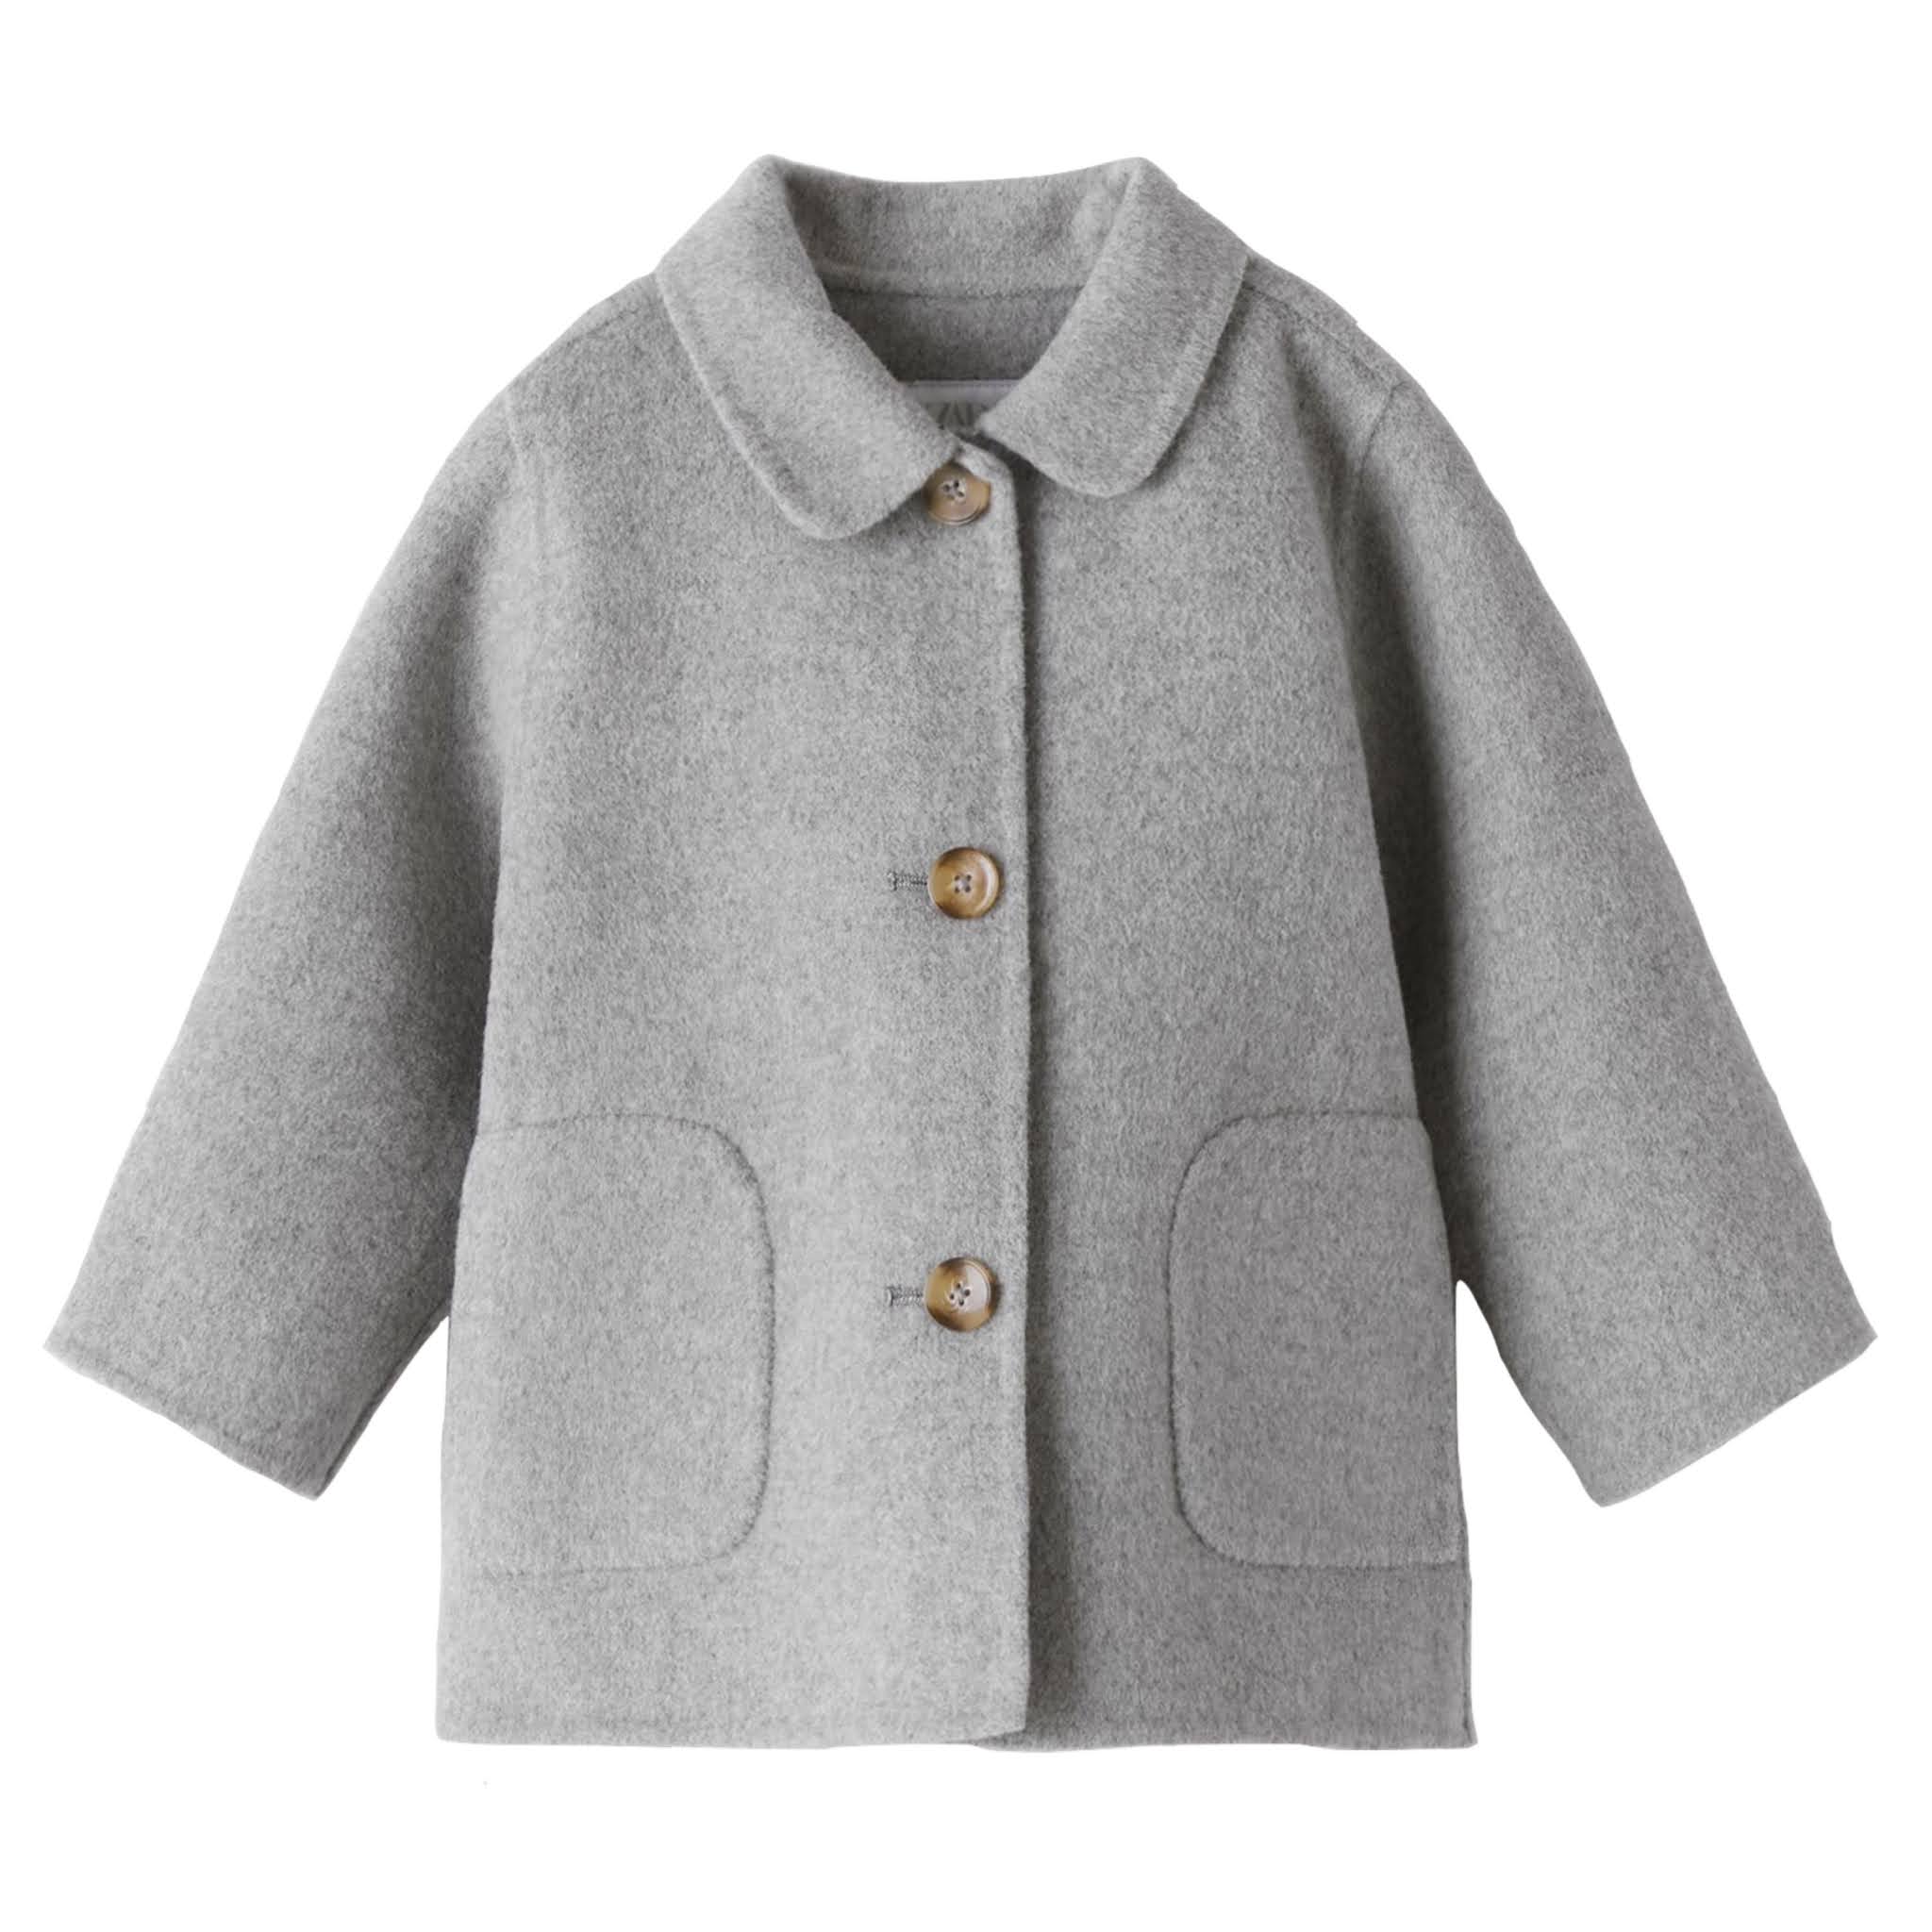 Toddler Gray Wool Coat from Zara Kids